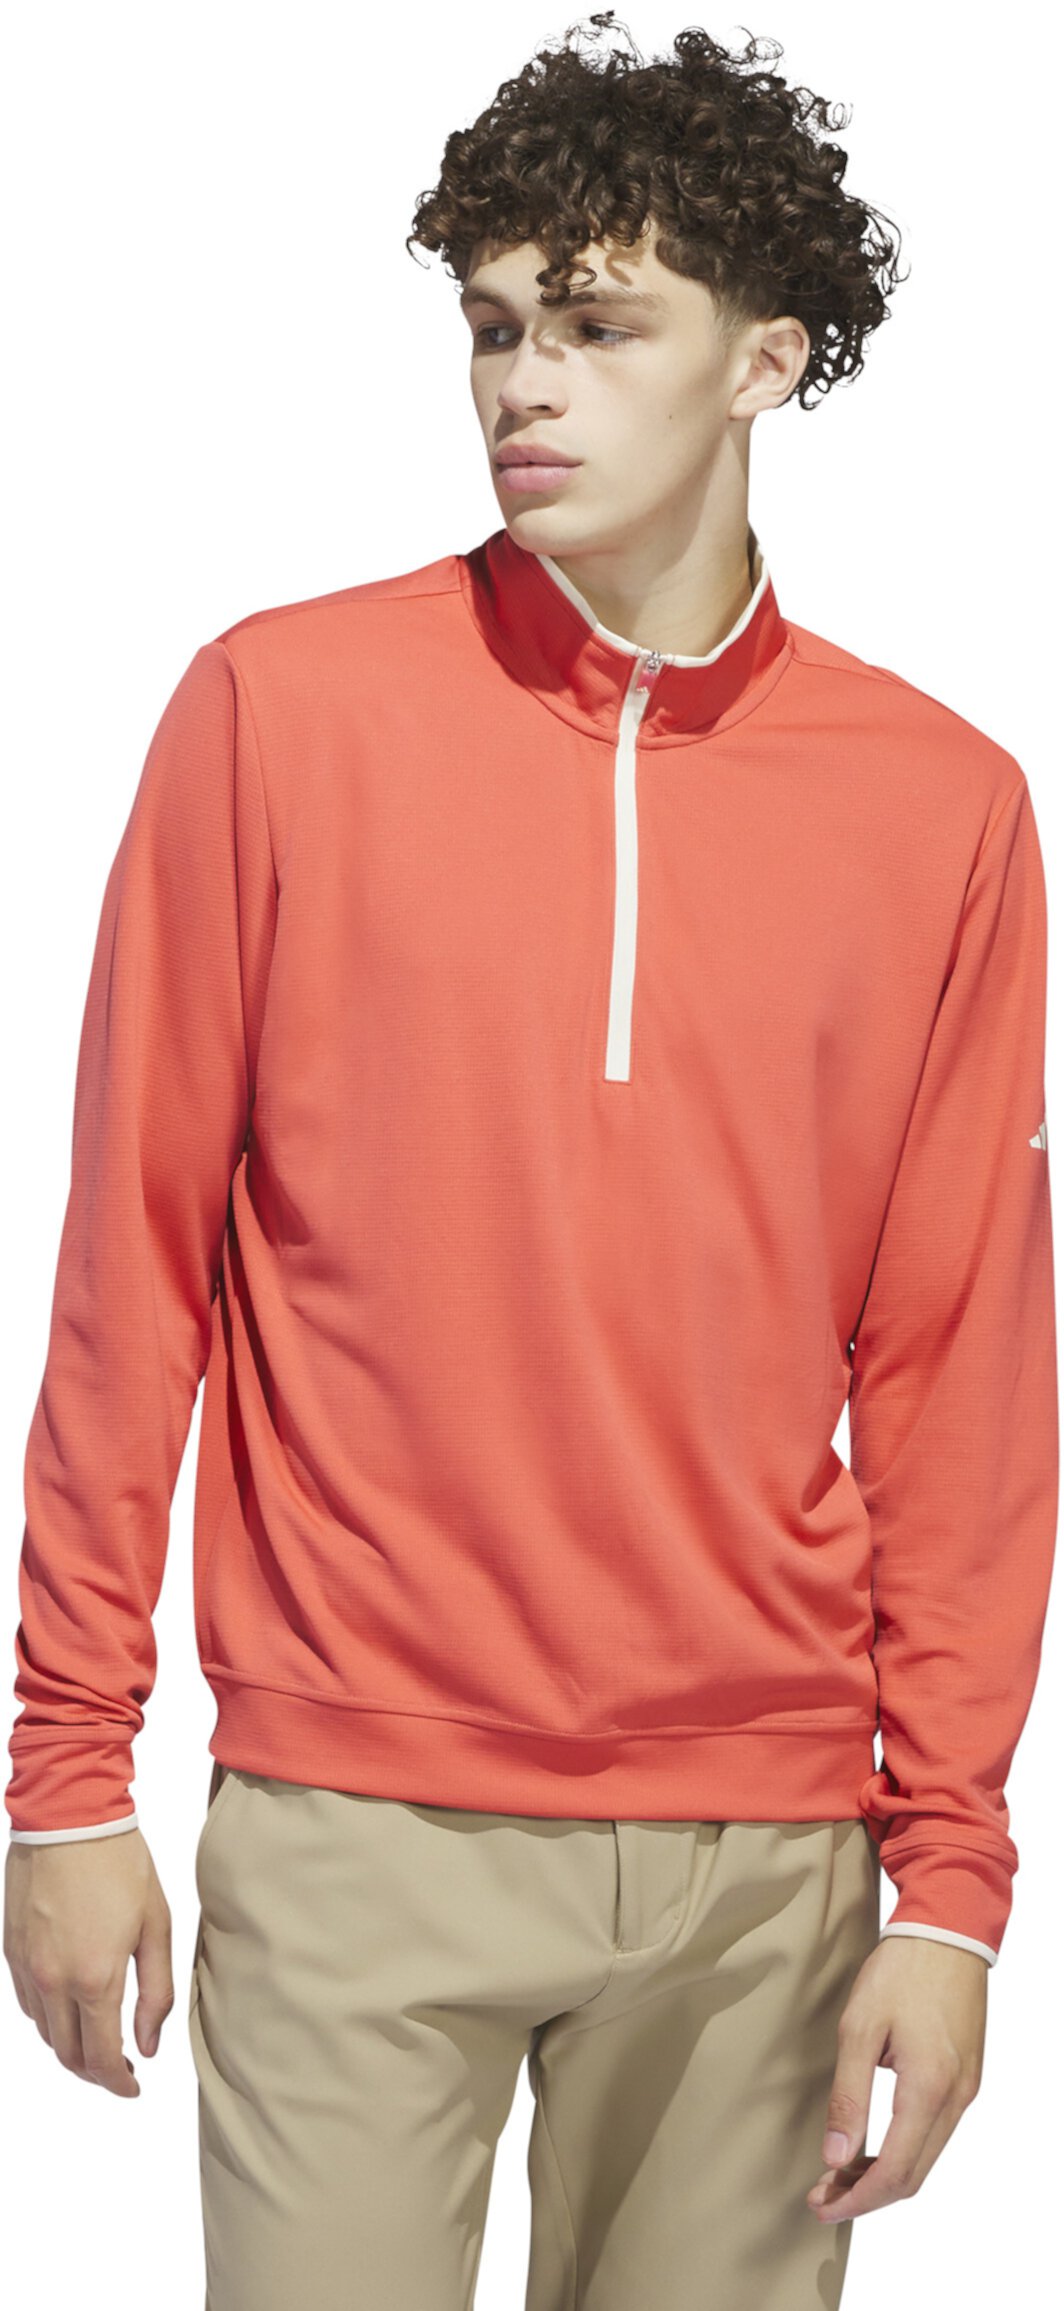 Легкий пуловер Core с молнией 1/2 Adidas